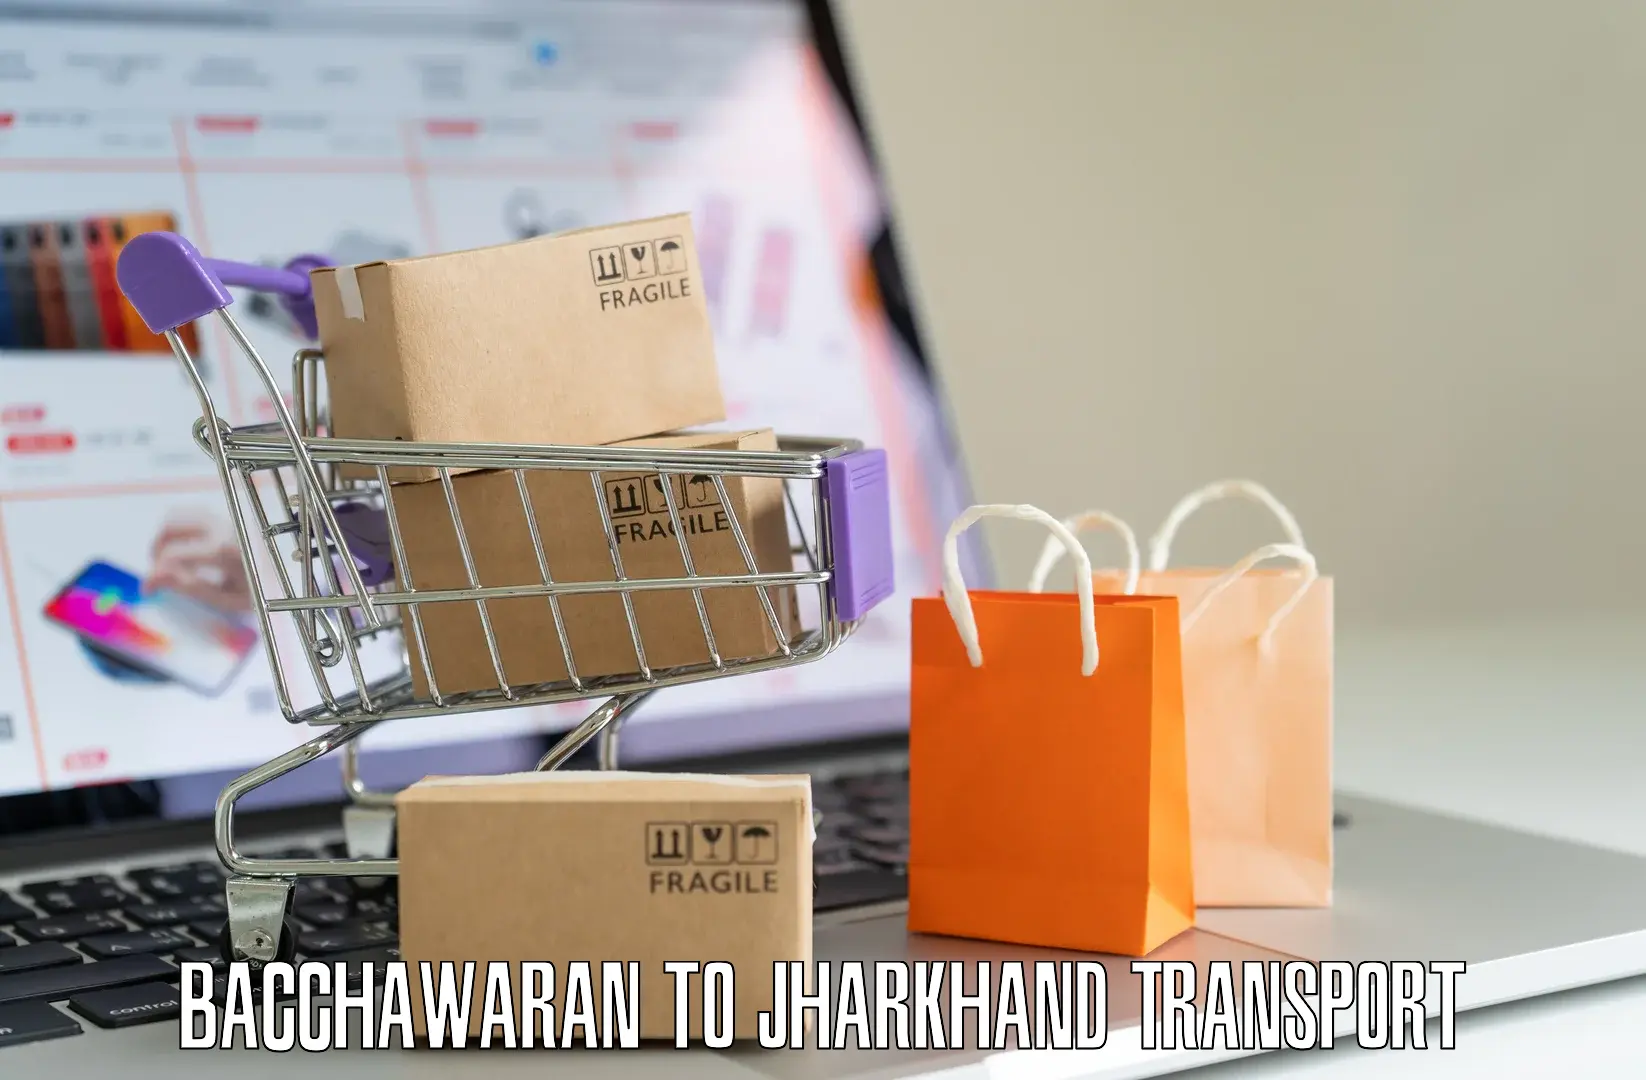 Intercity goods transport Bacchawaran to Jamshedpur